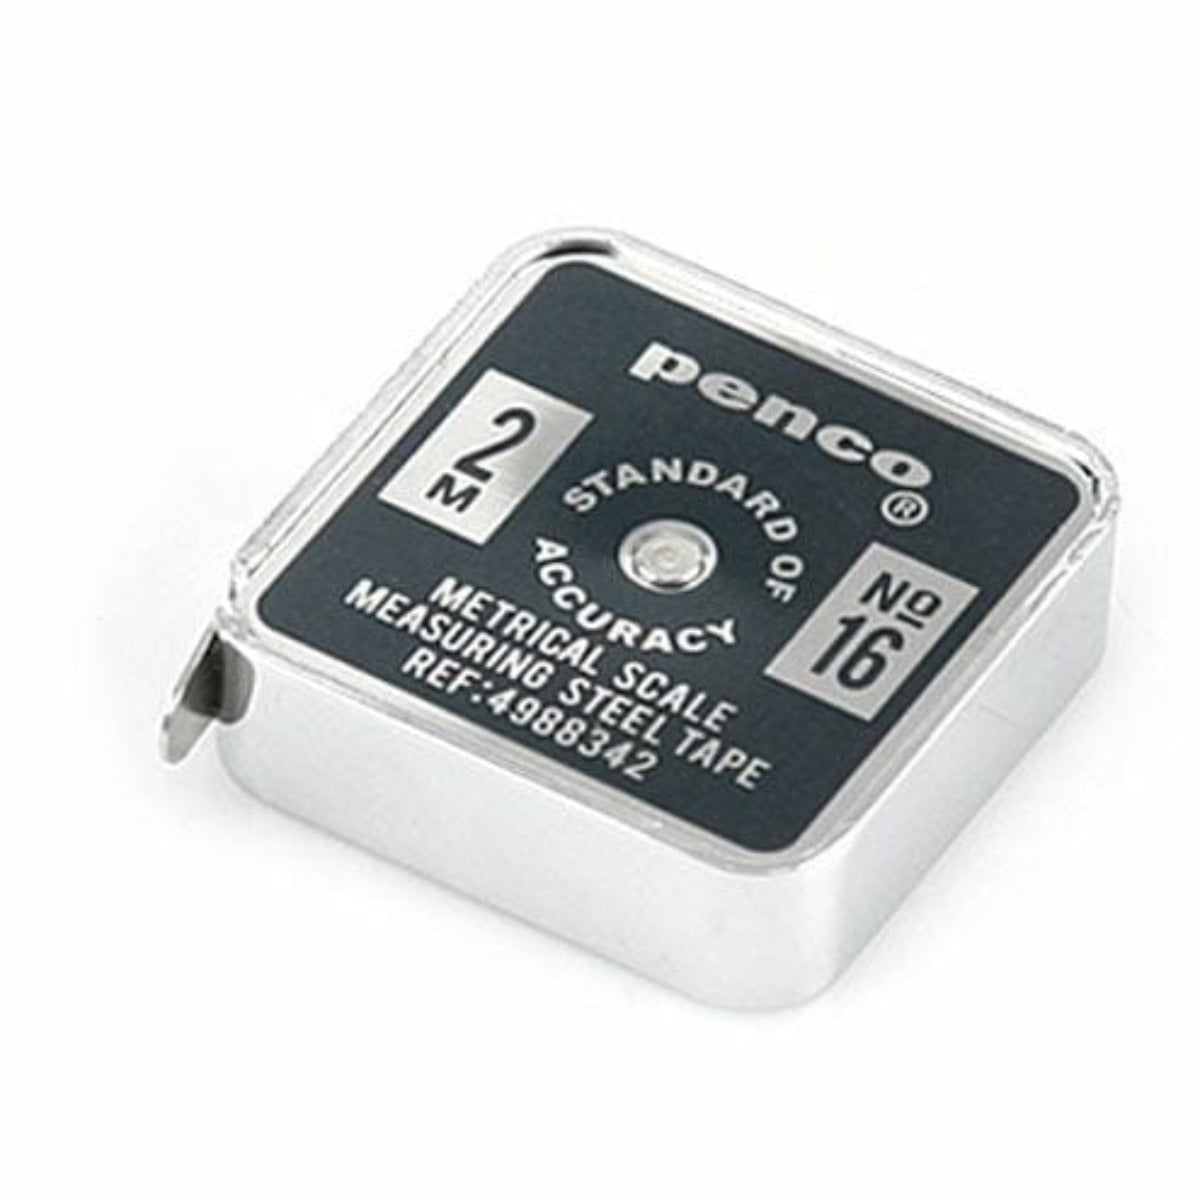 Penco - Pocket Tape Measure - Statonary & Office - DANSKmadeforrooms